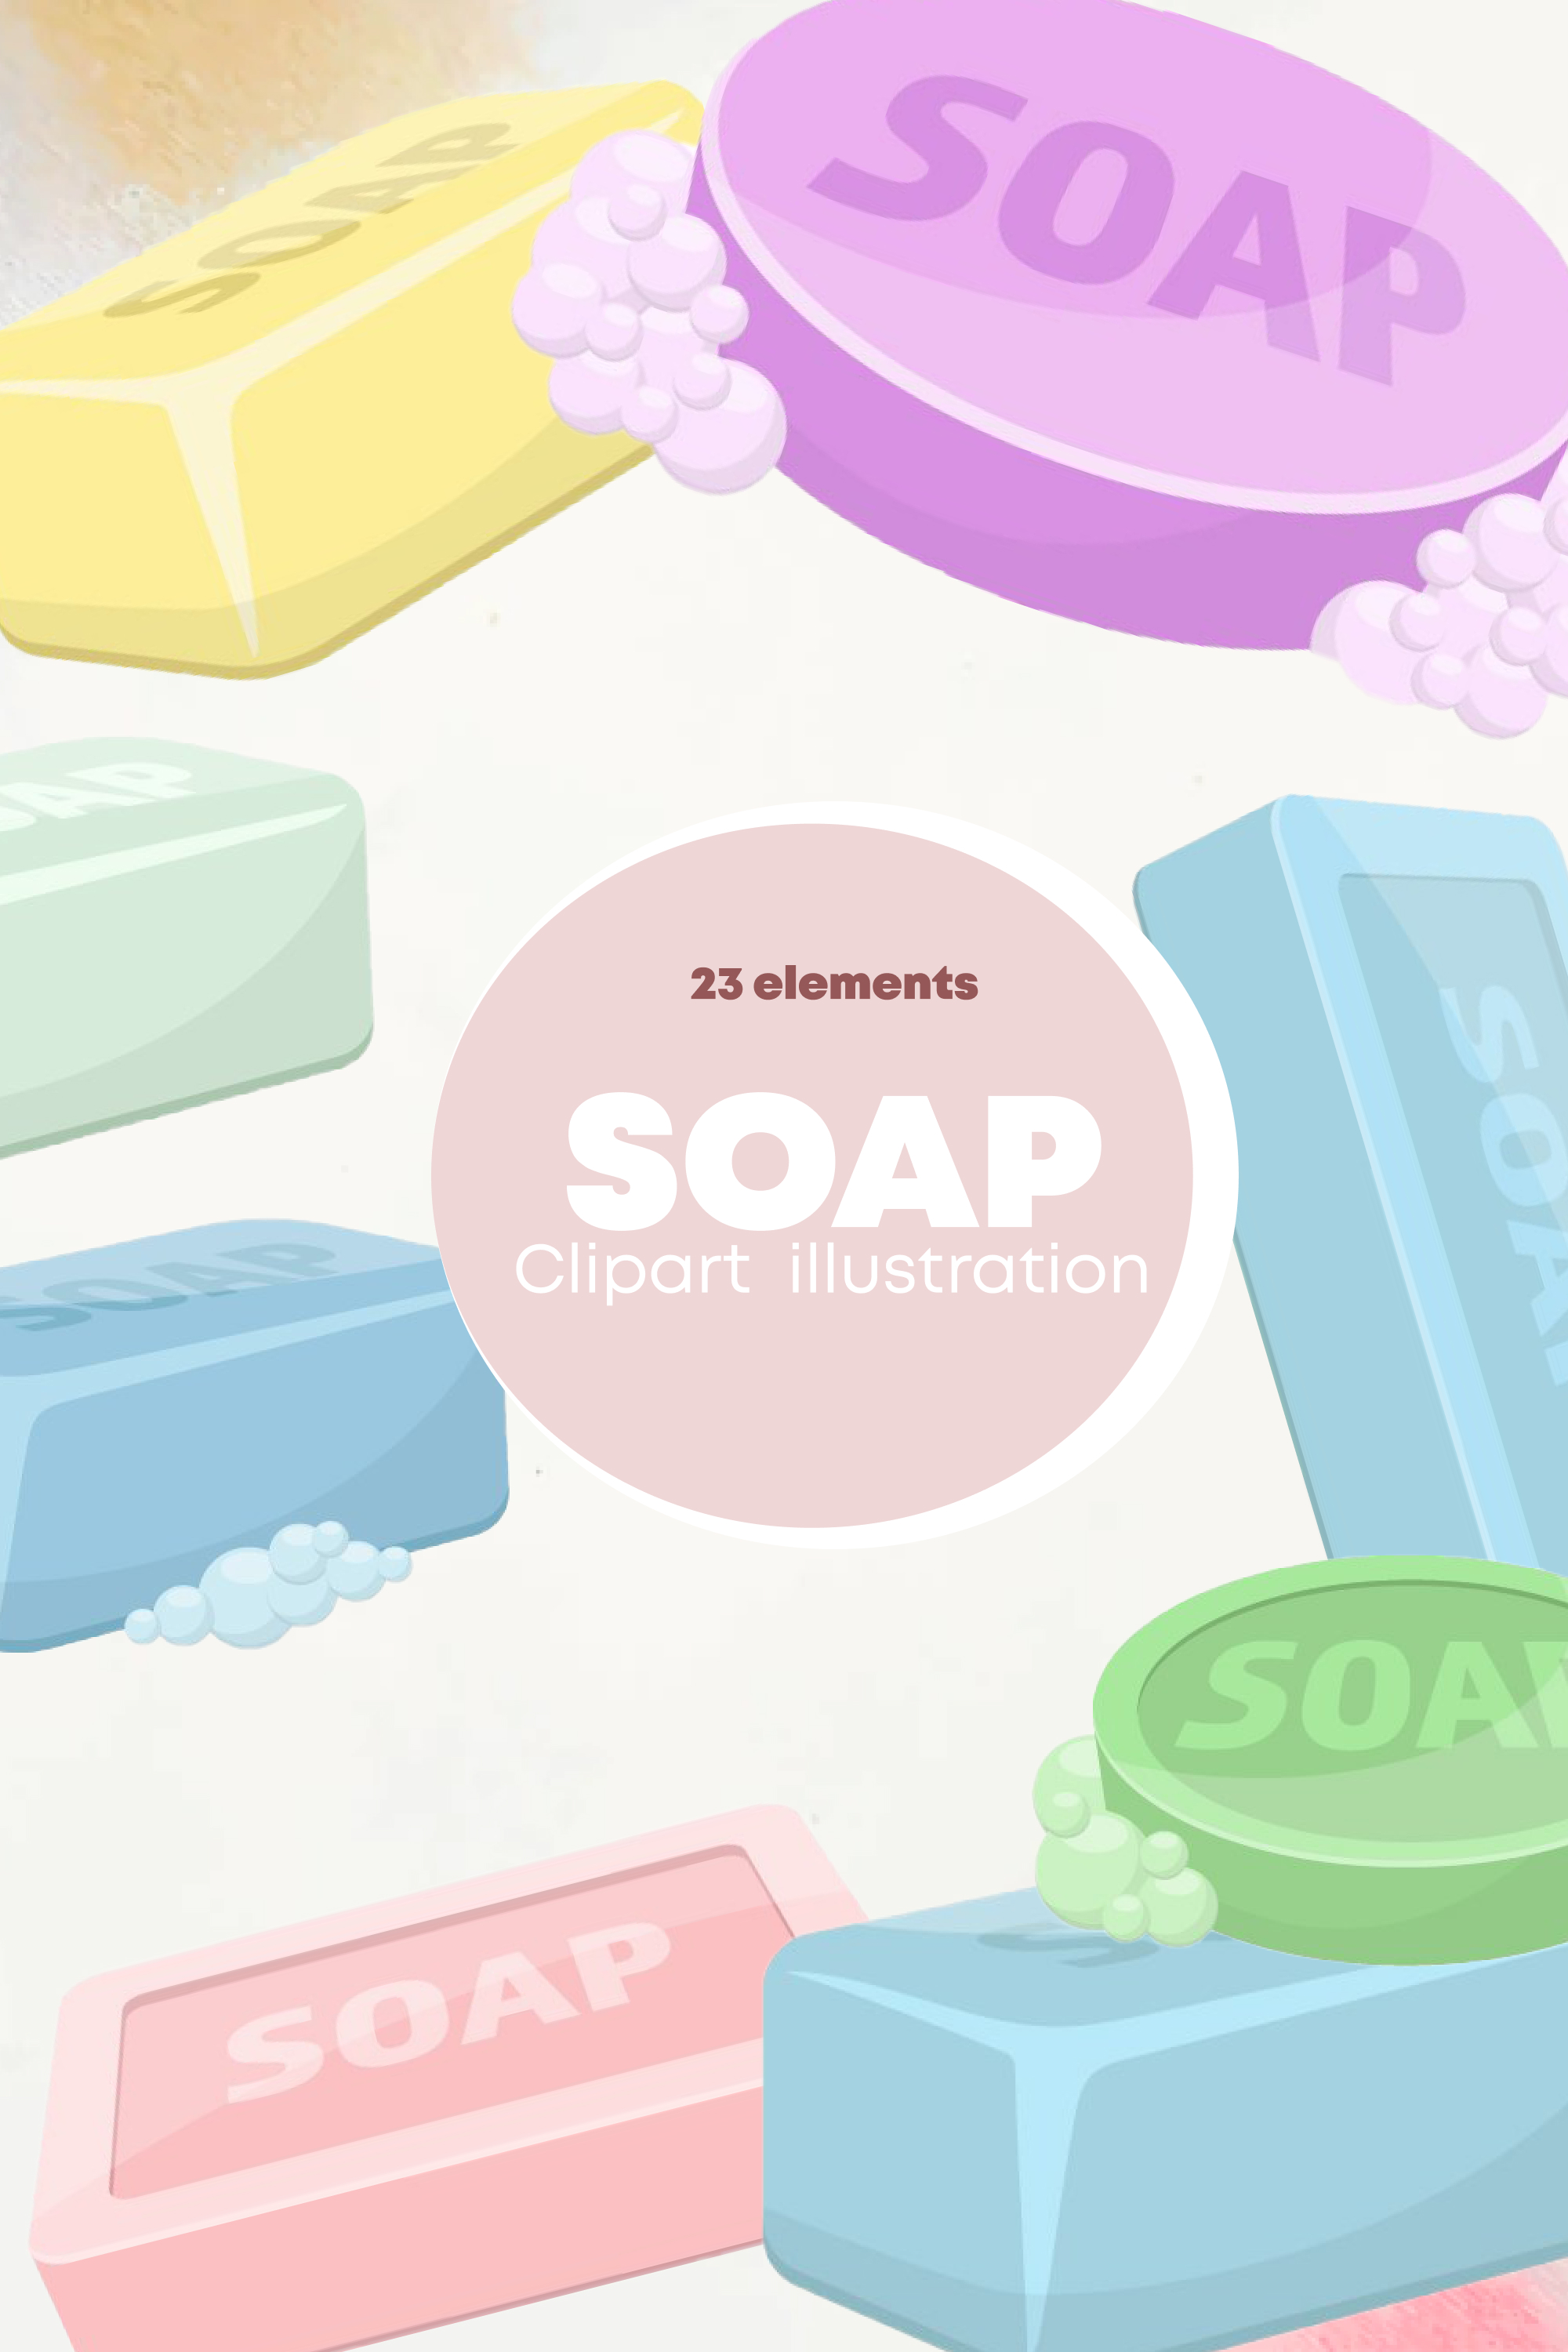 Solid soap for washing clipart vector design illustration of pinterest.